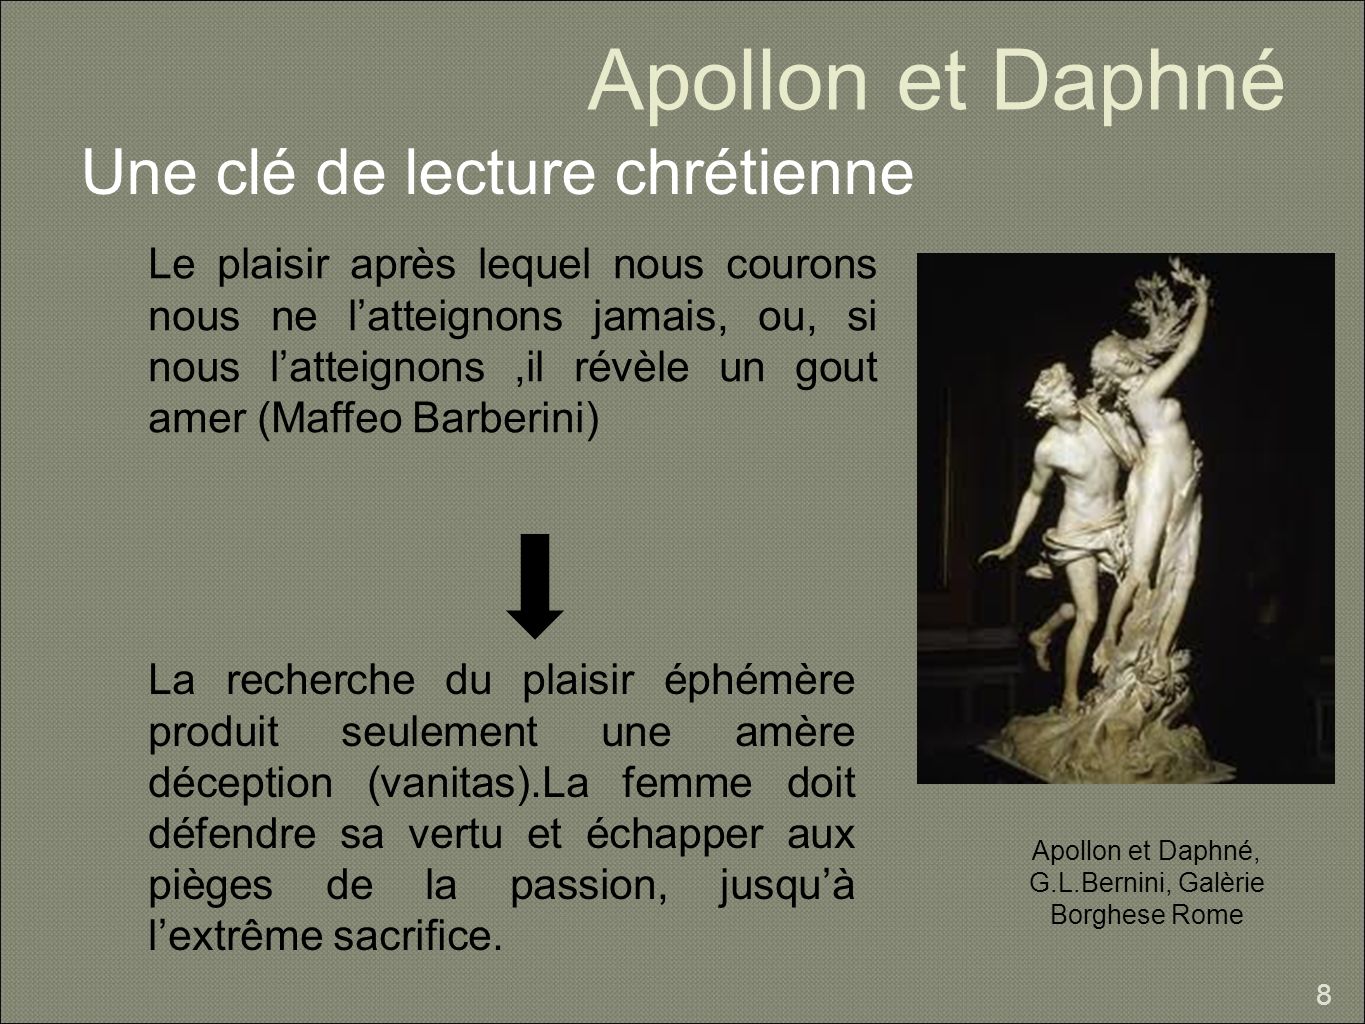 Apollon et Daphné, G.L.Bernini, Galèrie Borghese Rome